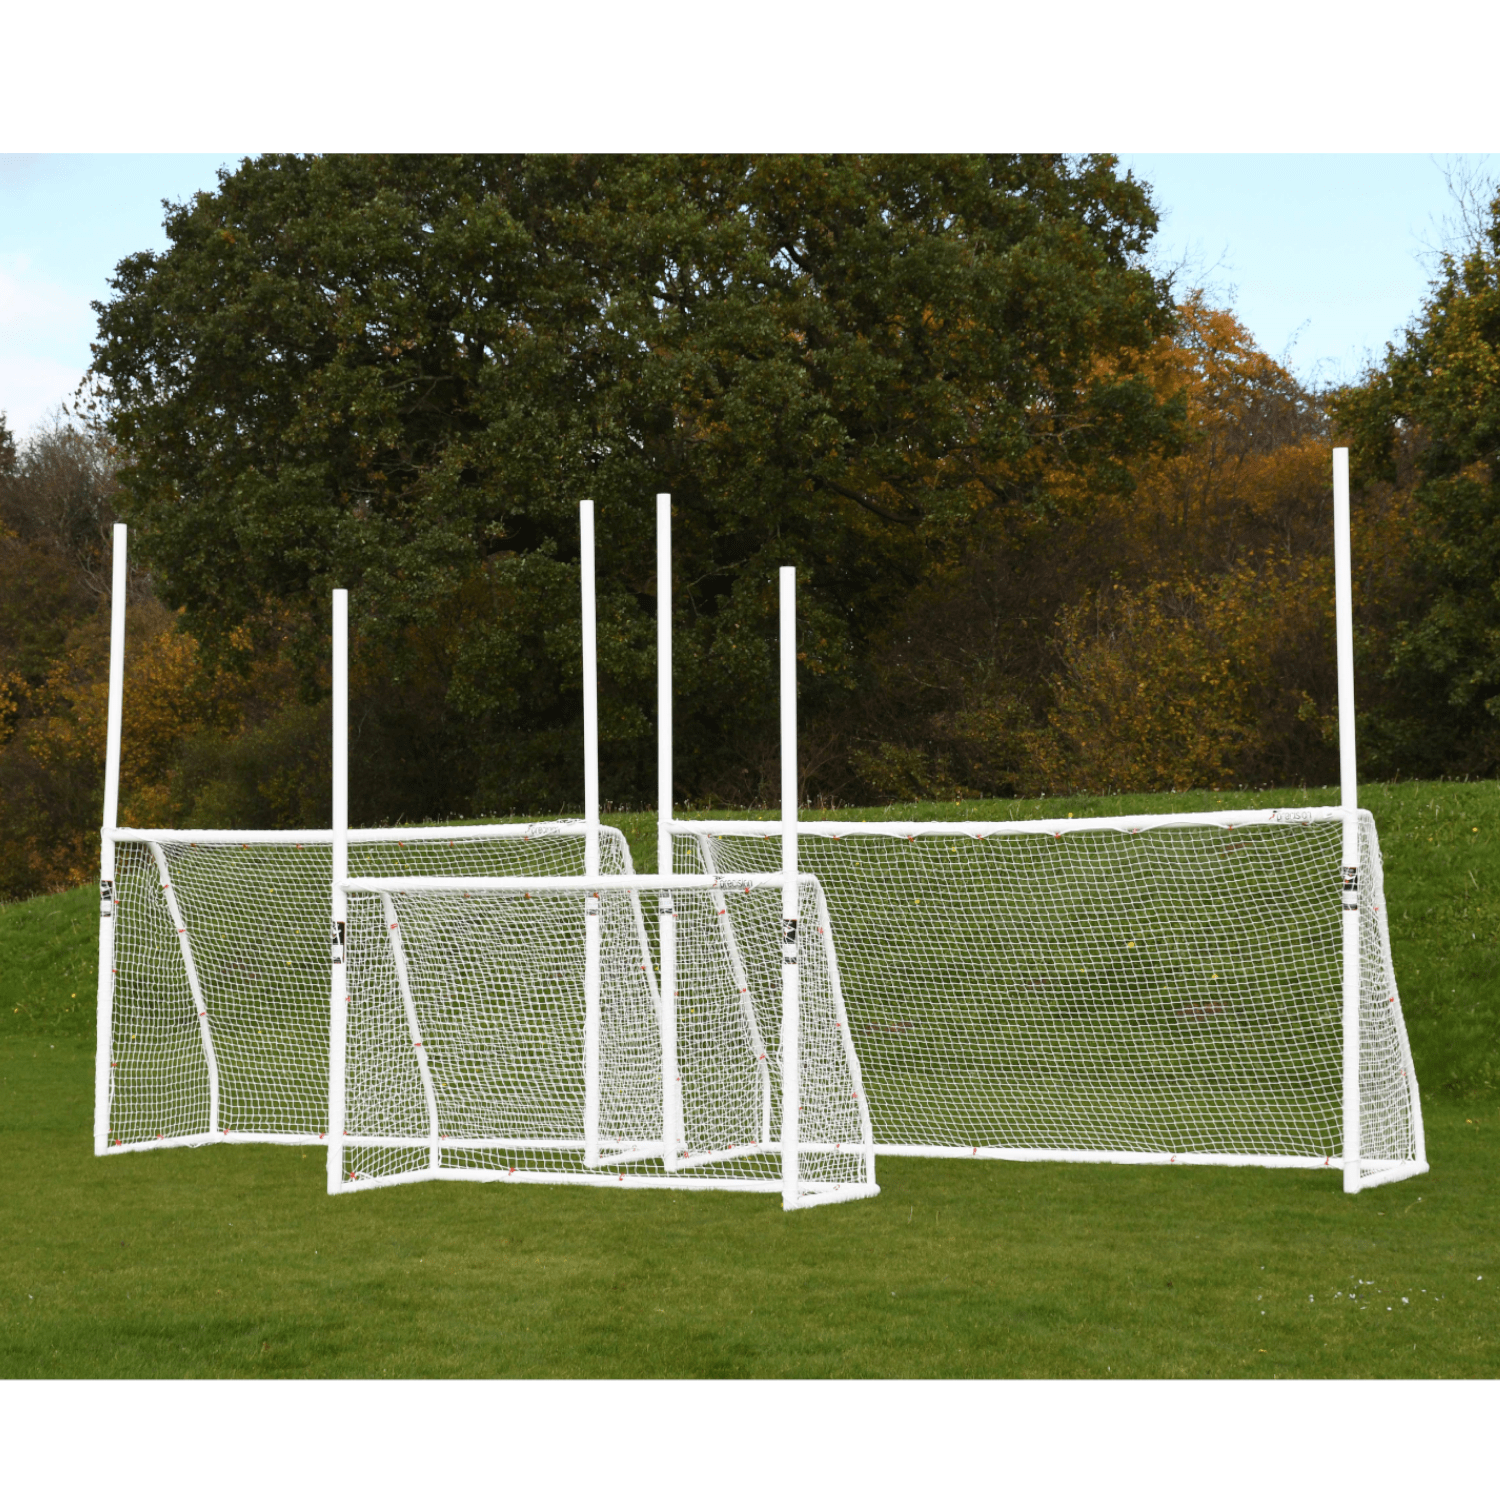 Precision GAA Match Goal Posts - Bourke Sports Limited